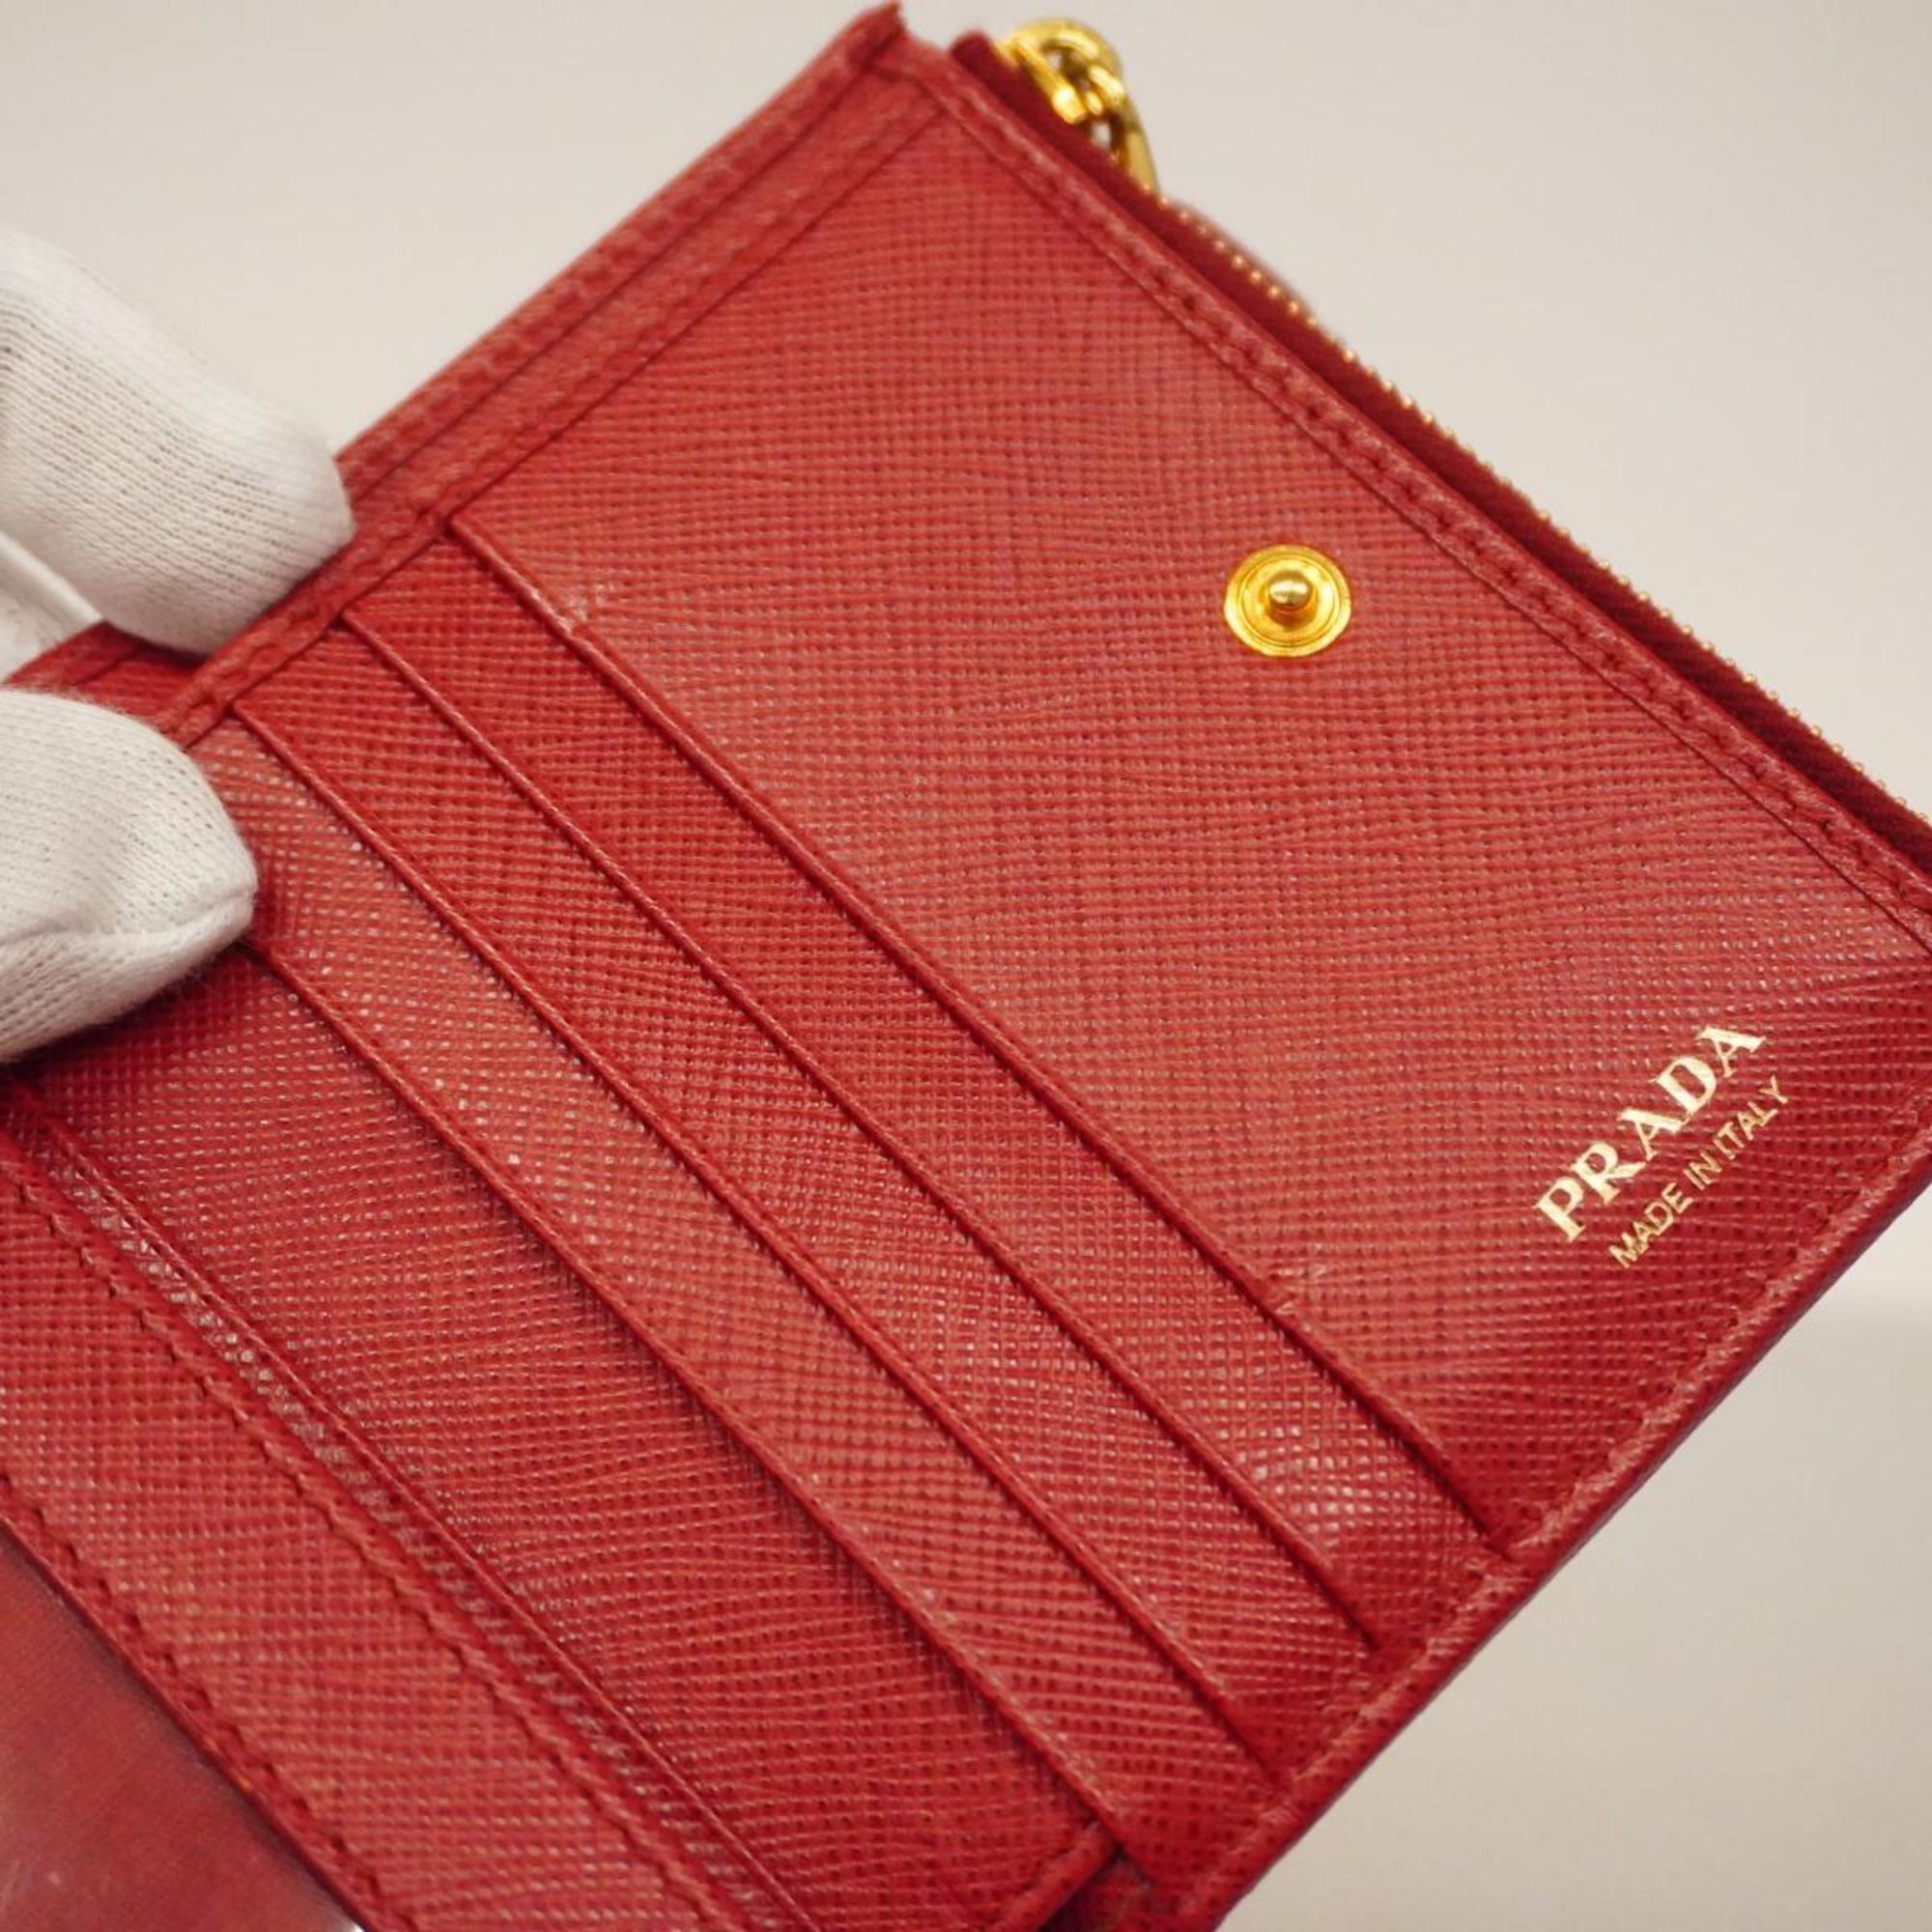 Prada wallet saffiano leather red ladies